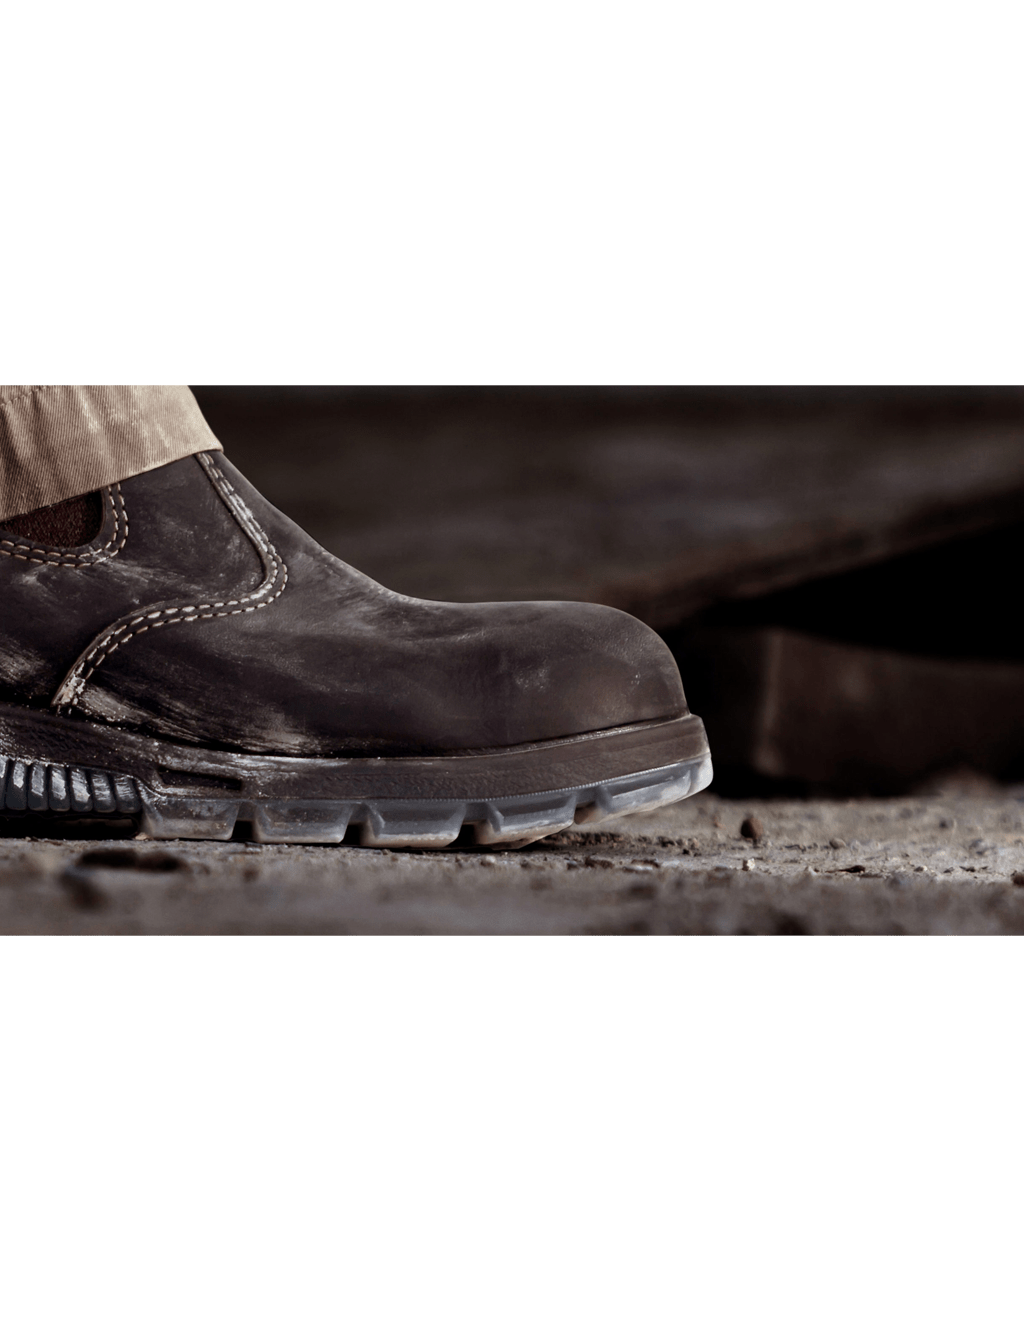 REDBACK USBBA STEEL CAP BOOTS WHEAT SUEDE - Raben Footwear